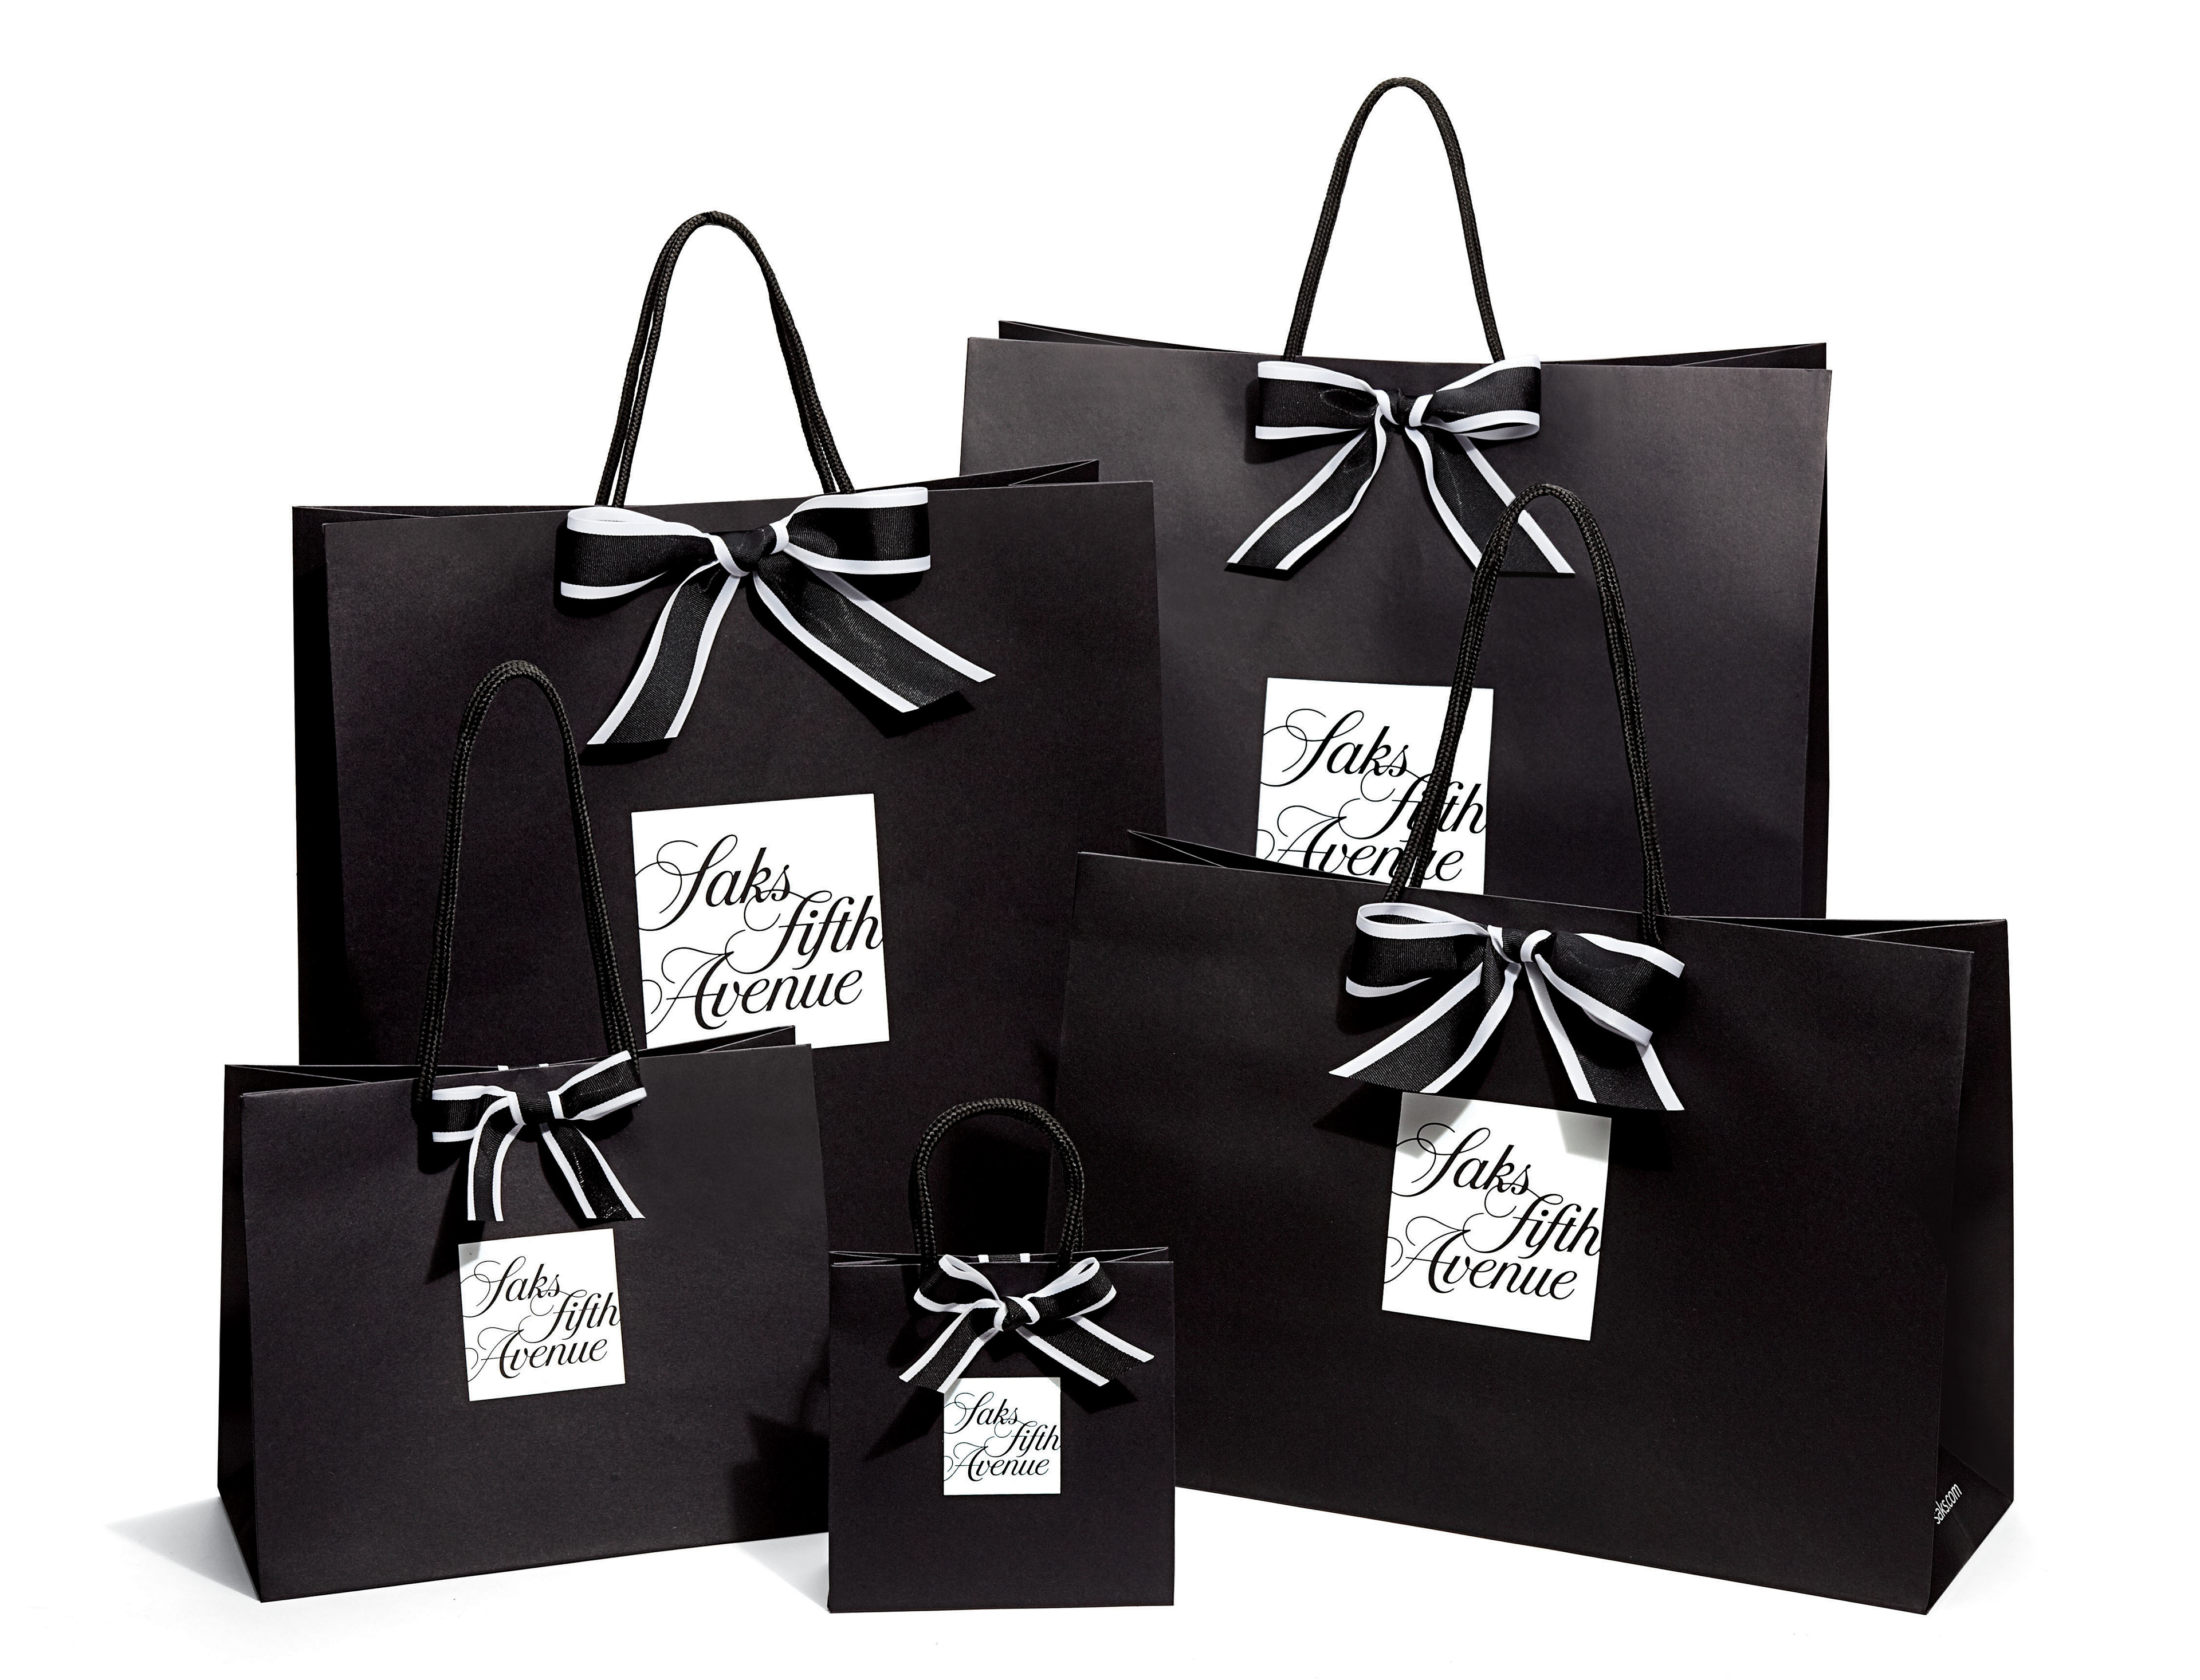 Saks Fifth Avenue shopping bag